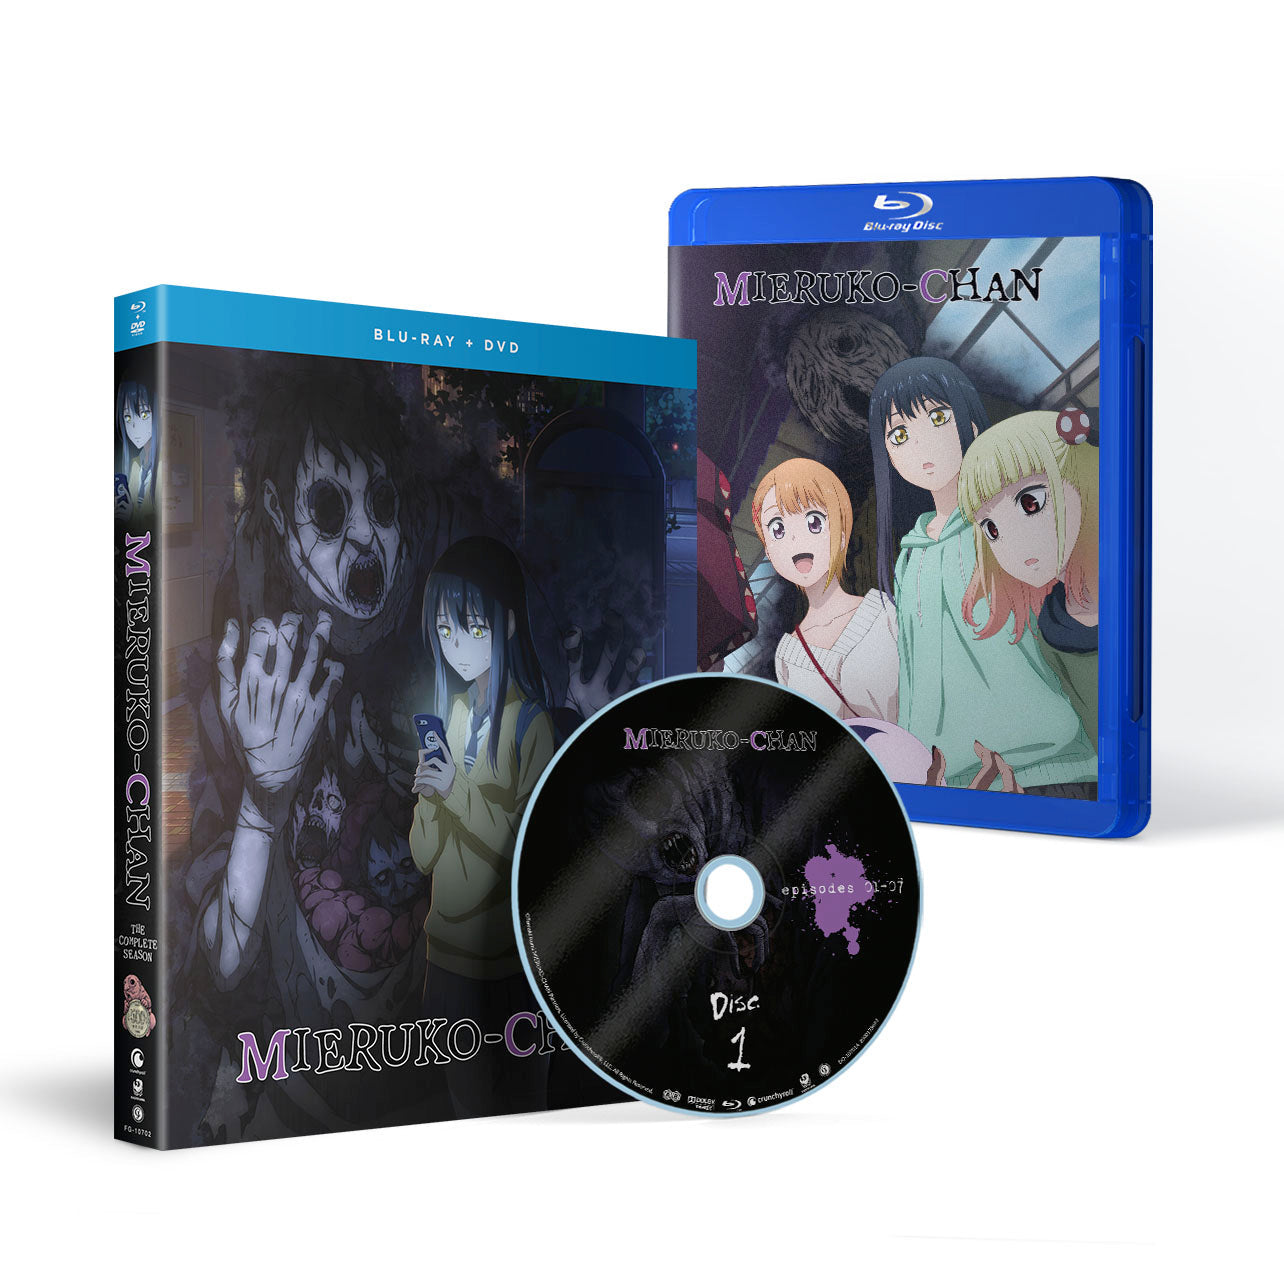 Mieruko-chan - The Complete Season - BD/DVD - LE image count 1